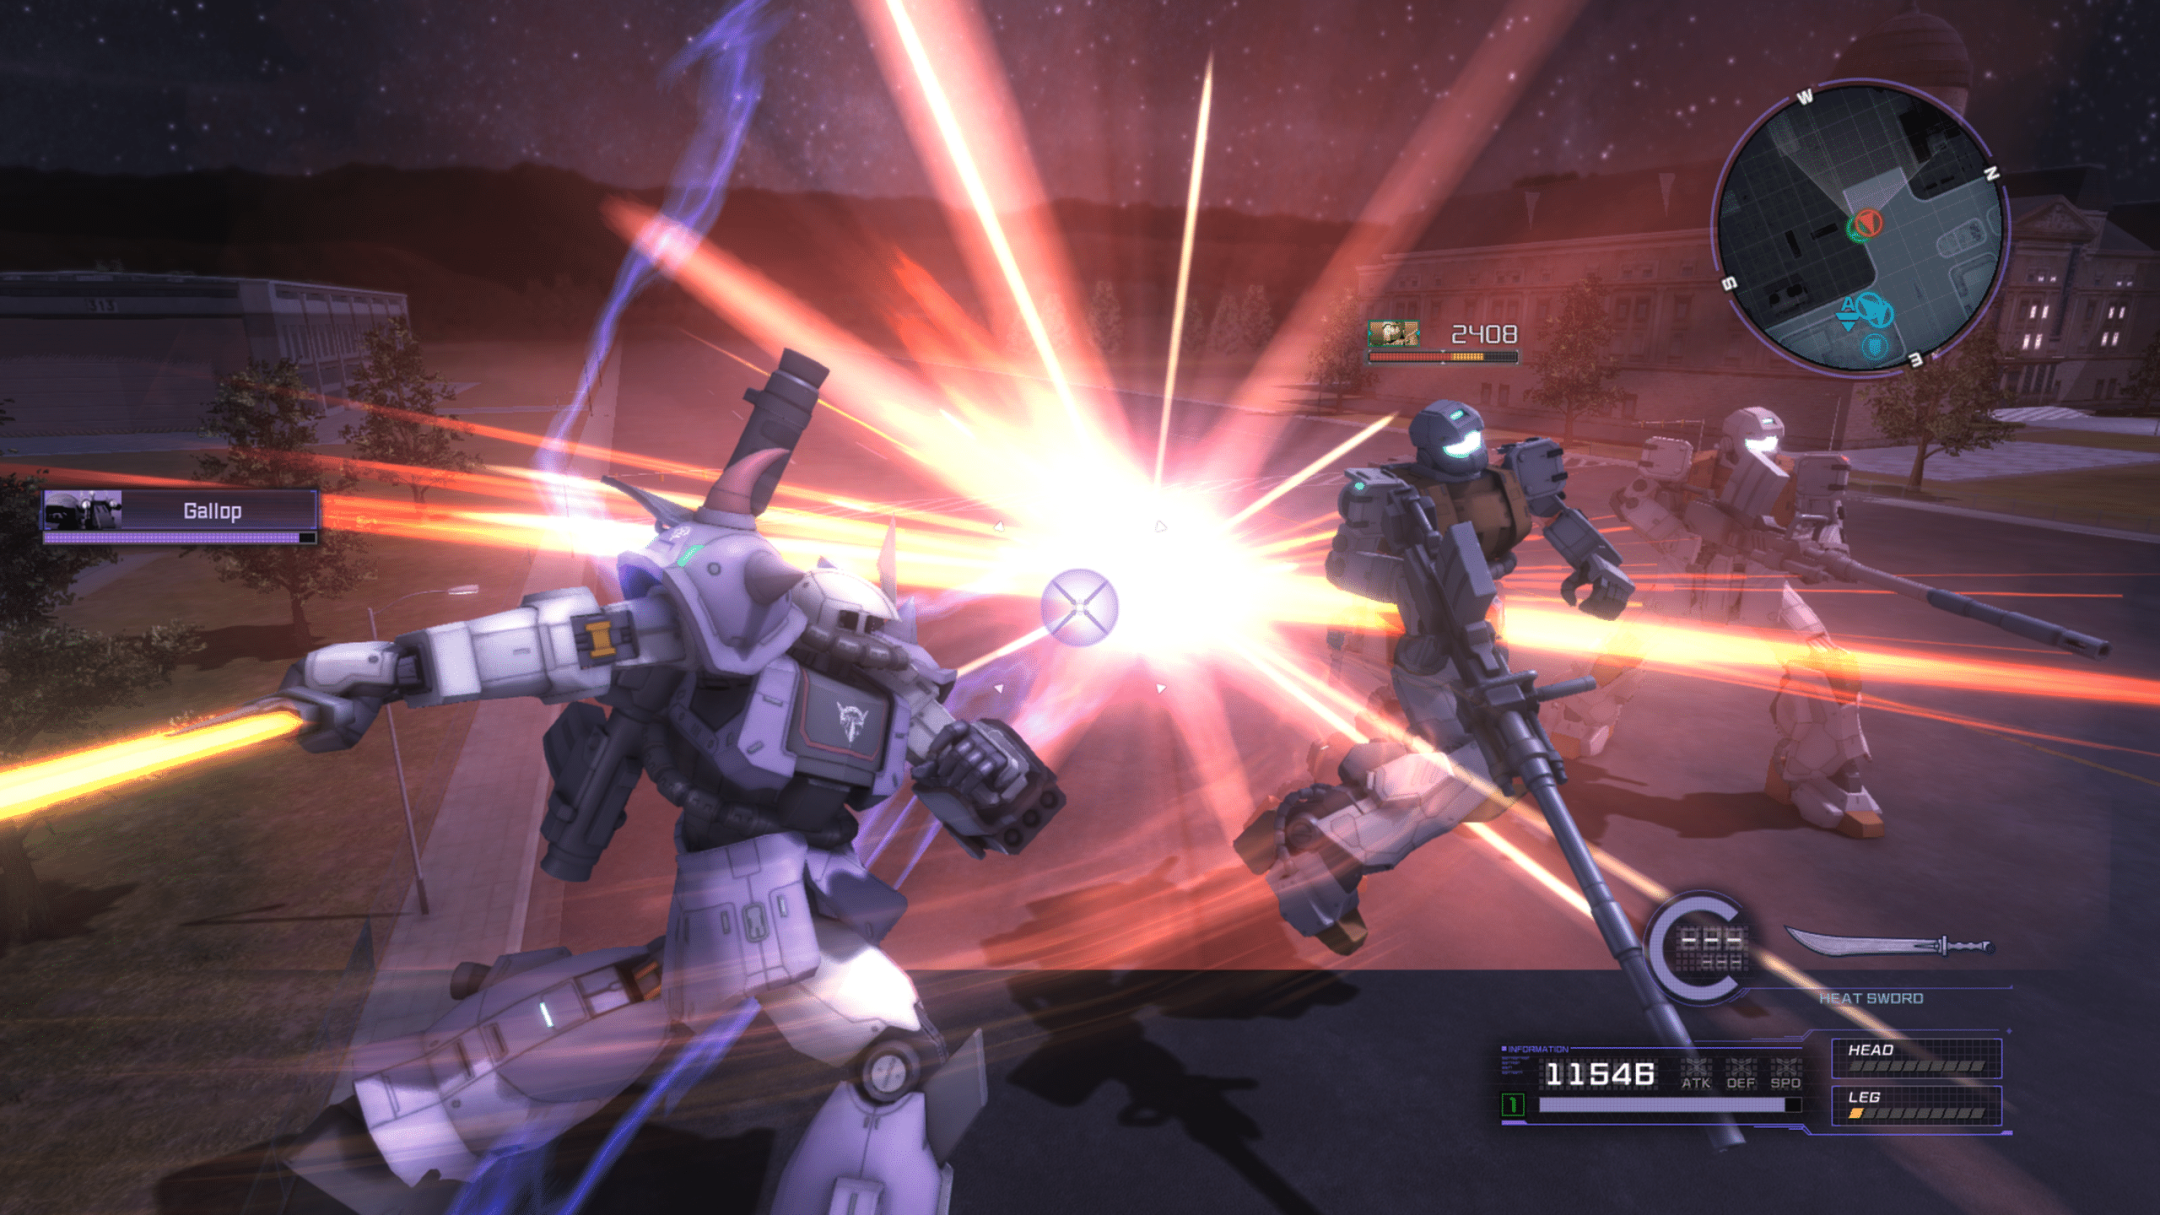 Mobile Suit Gundam: Battle Operation Code Fairy Recensione